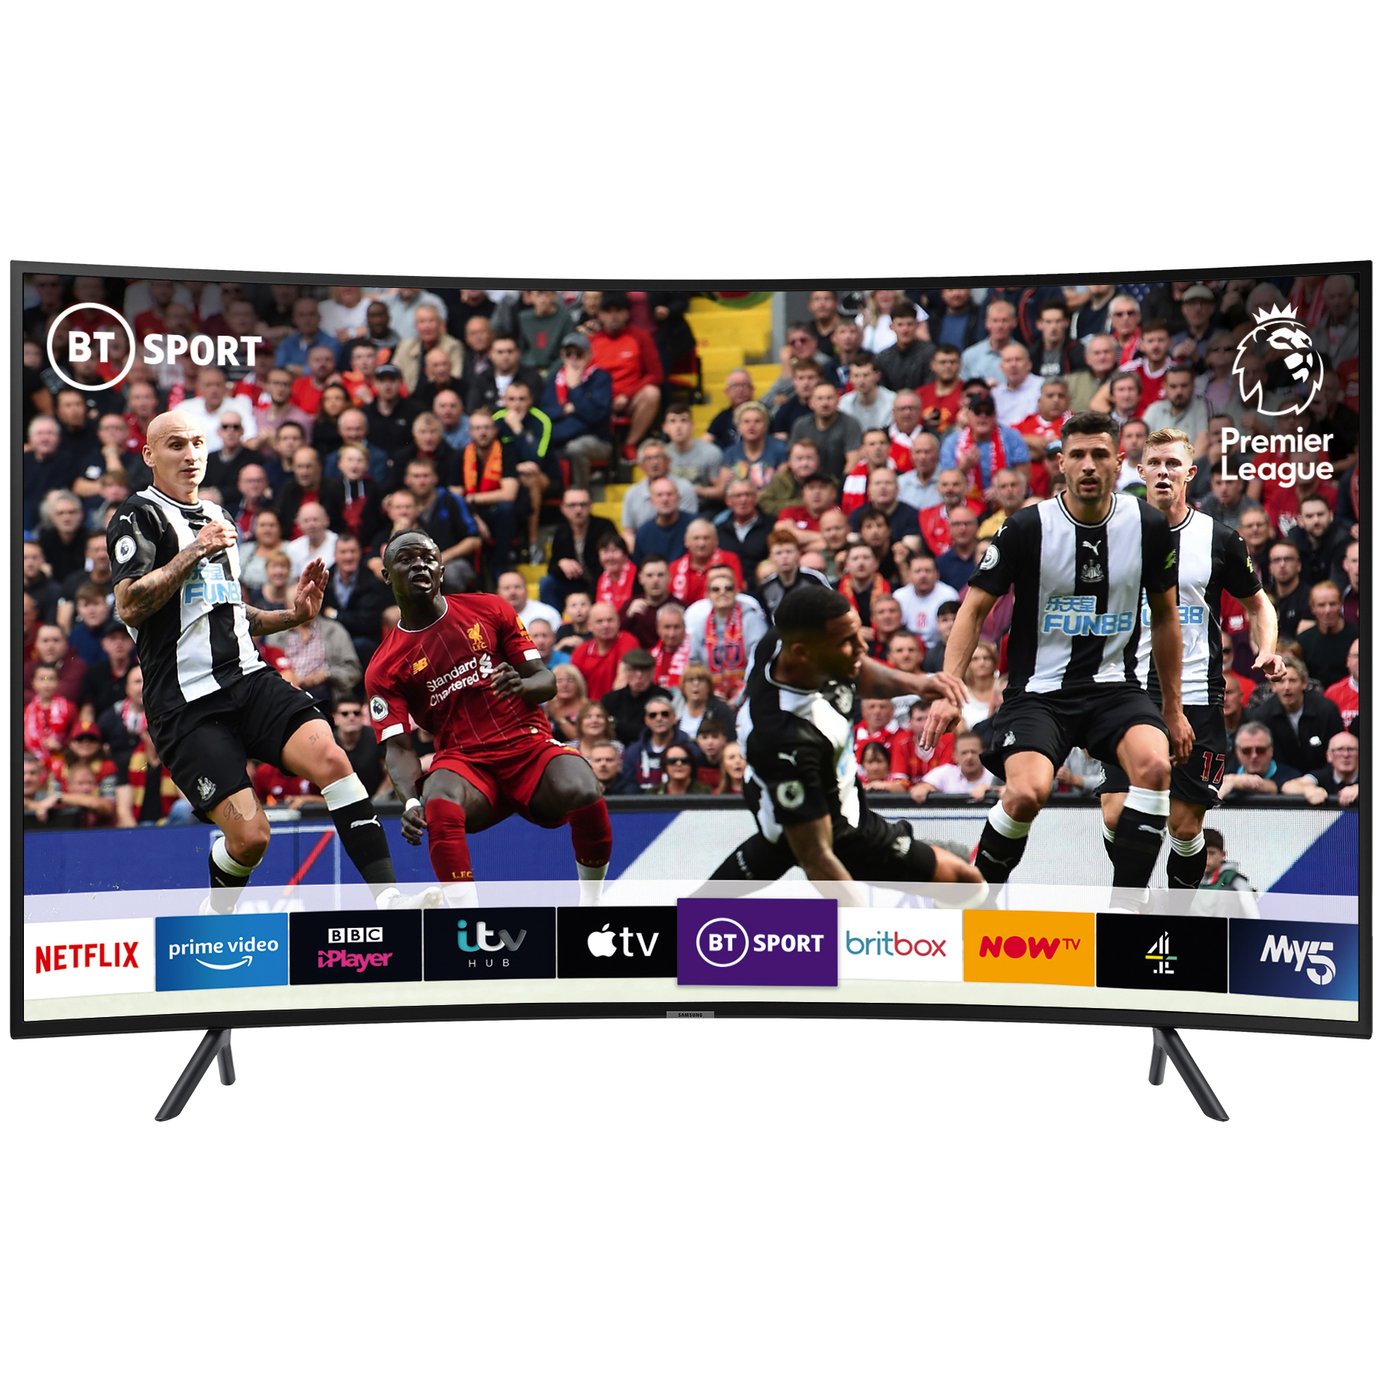 Samsung 49 Inch UE49RU7300KXXU Smart 4K HDR LED TV Review